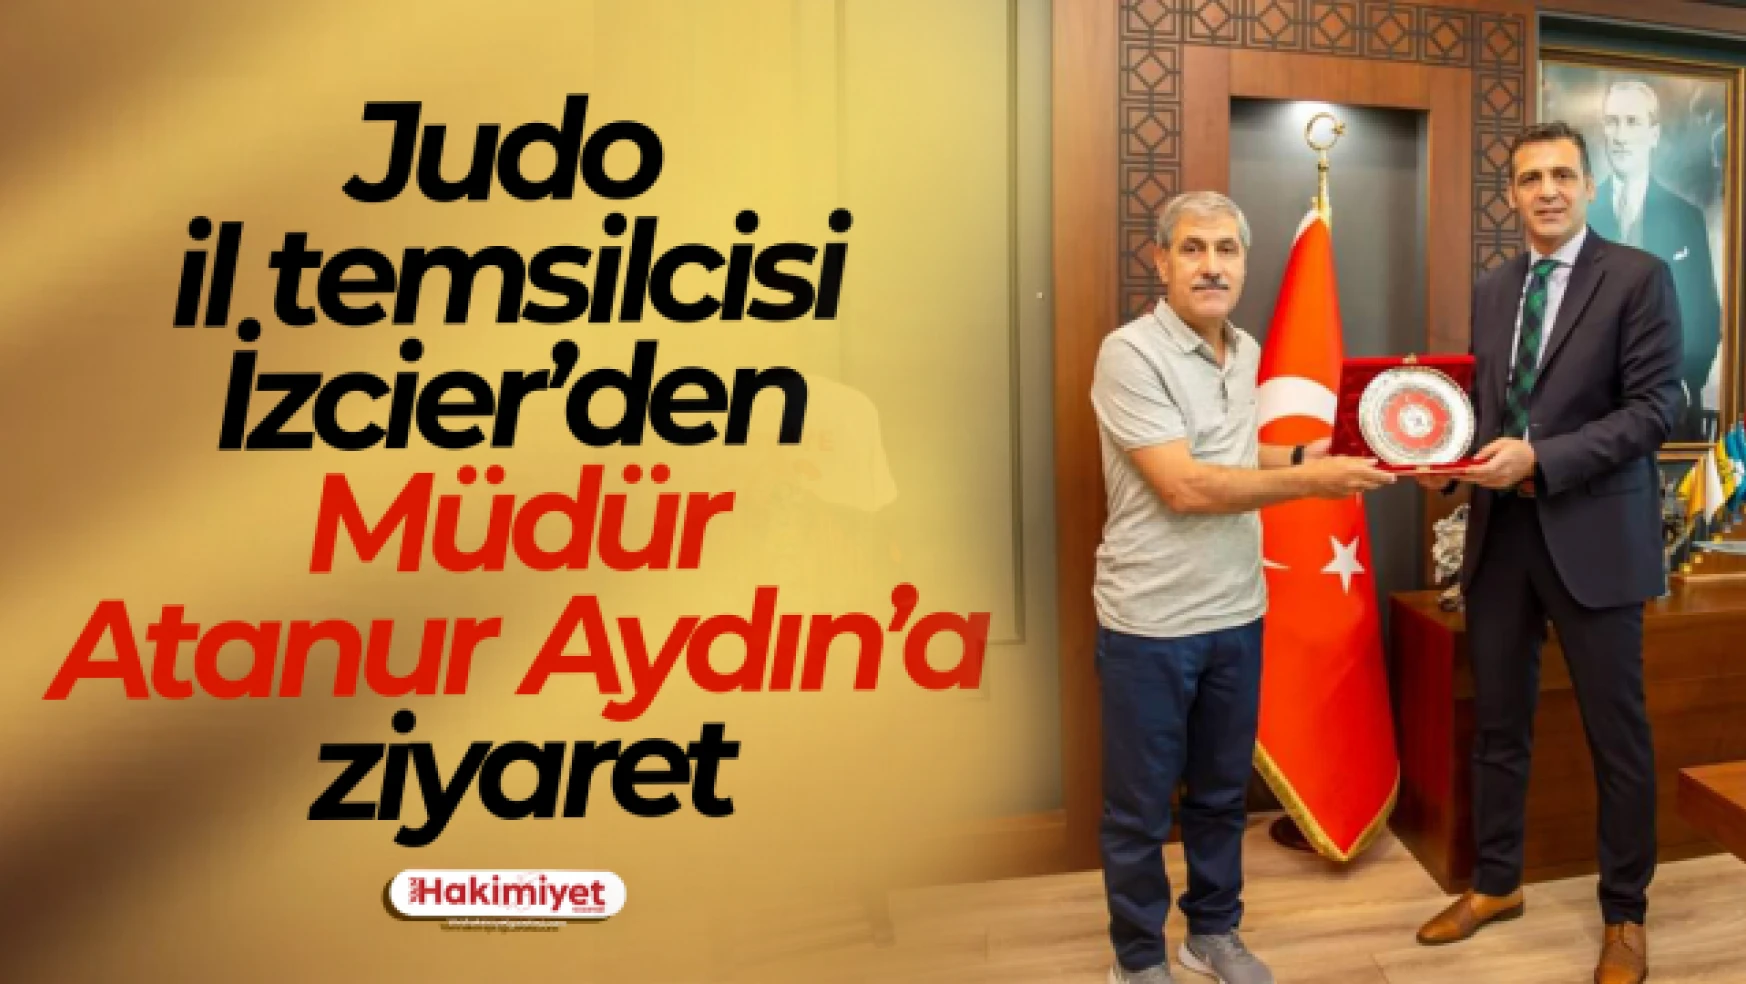 Judo Van İl Temsilcisi İzcier'den İl Emniyet Müdürü Atanur Aydın'a ziyaret